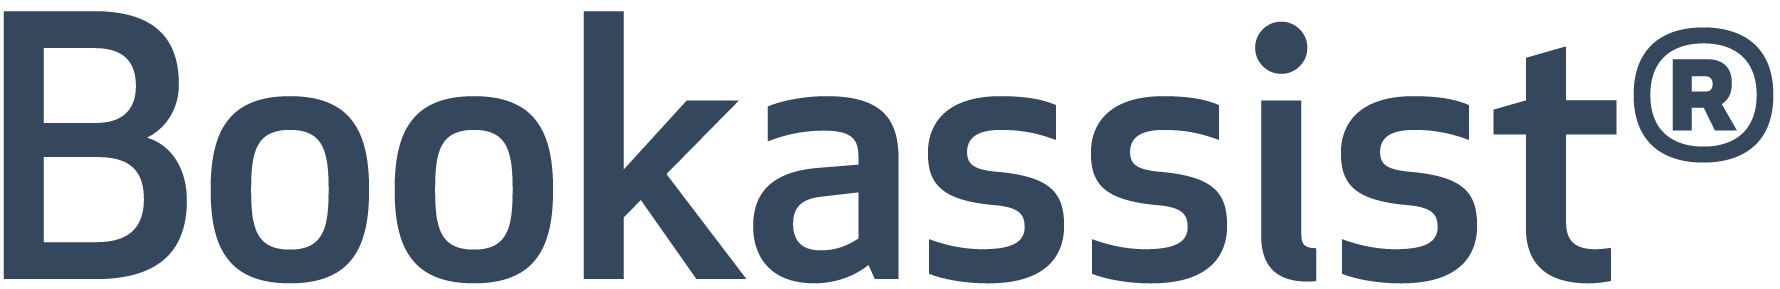 Bookassist logo